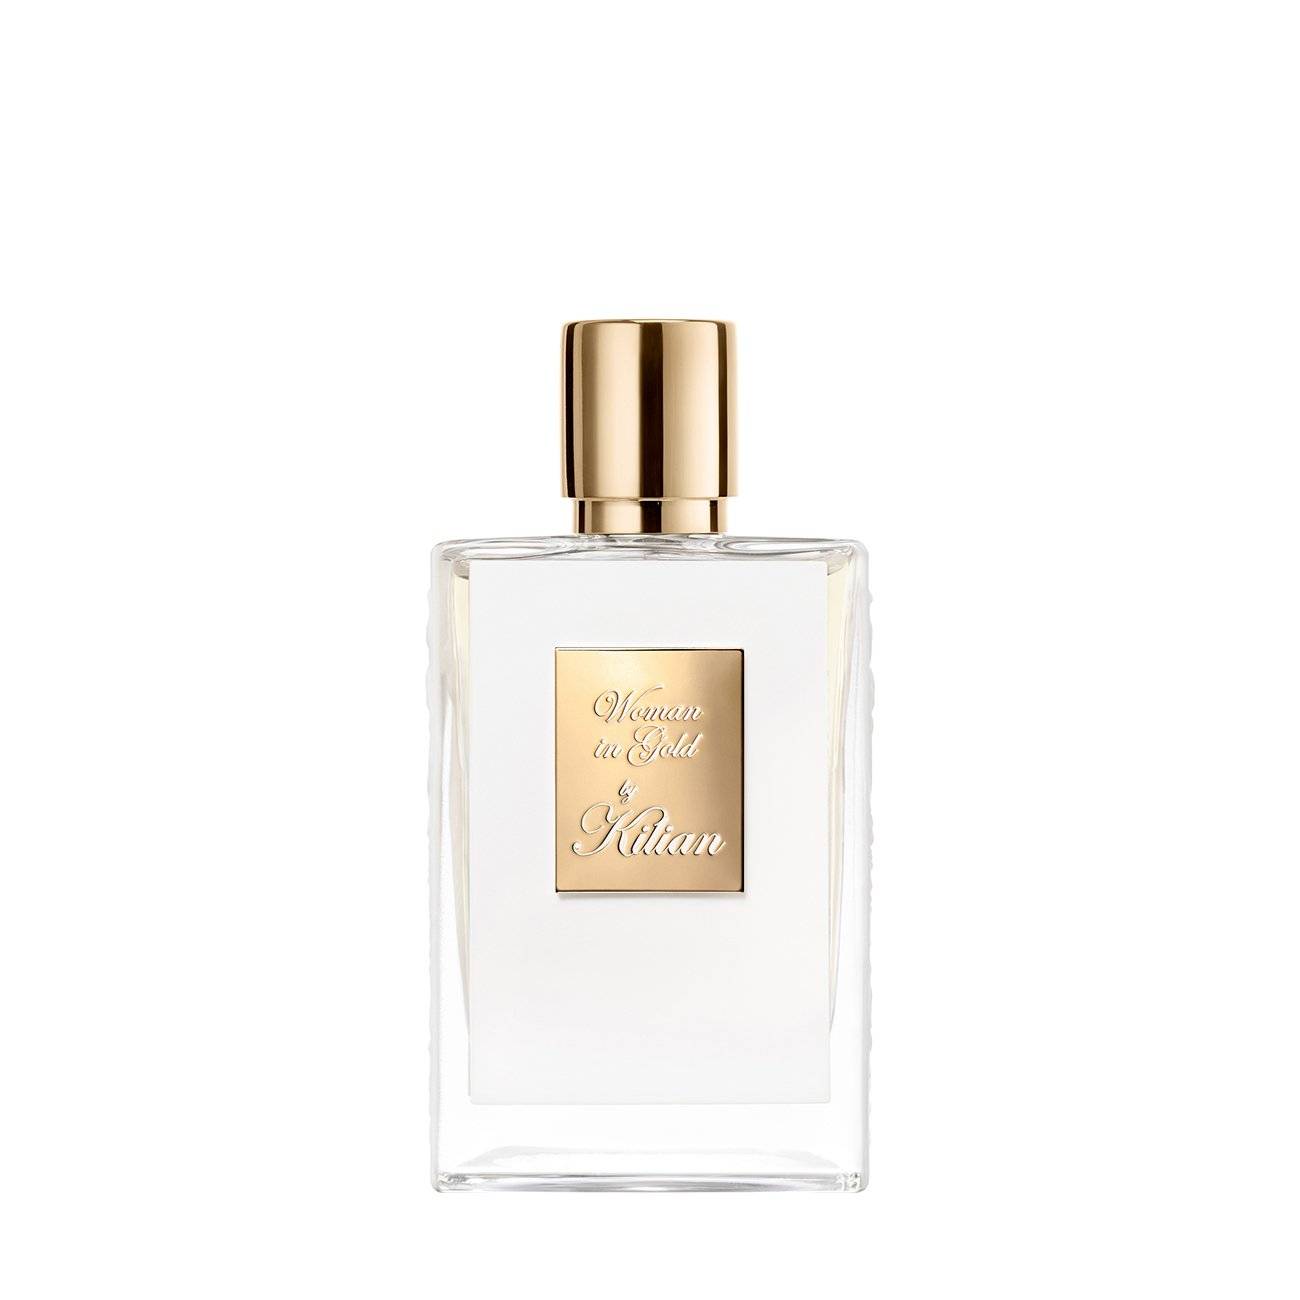 Parfum de niche Kilian WOMAN IN GOLD WITH COFFRET 50ml cu comanda online